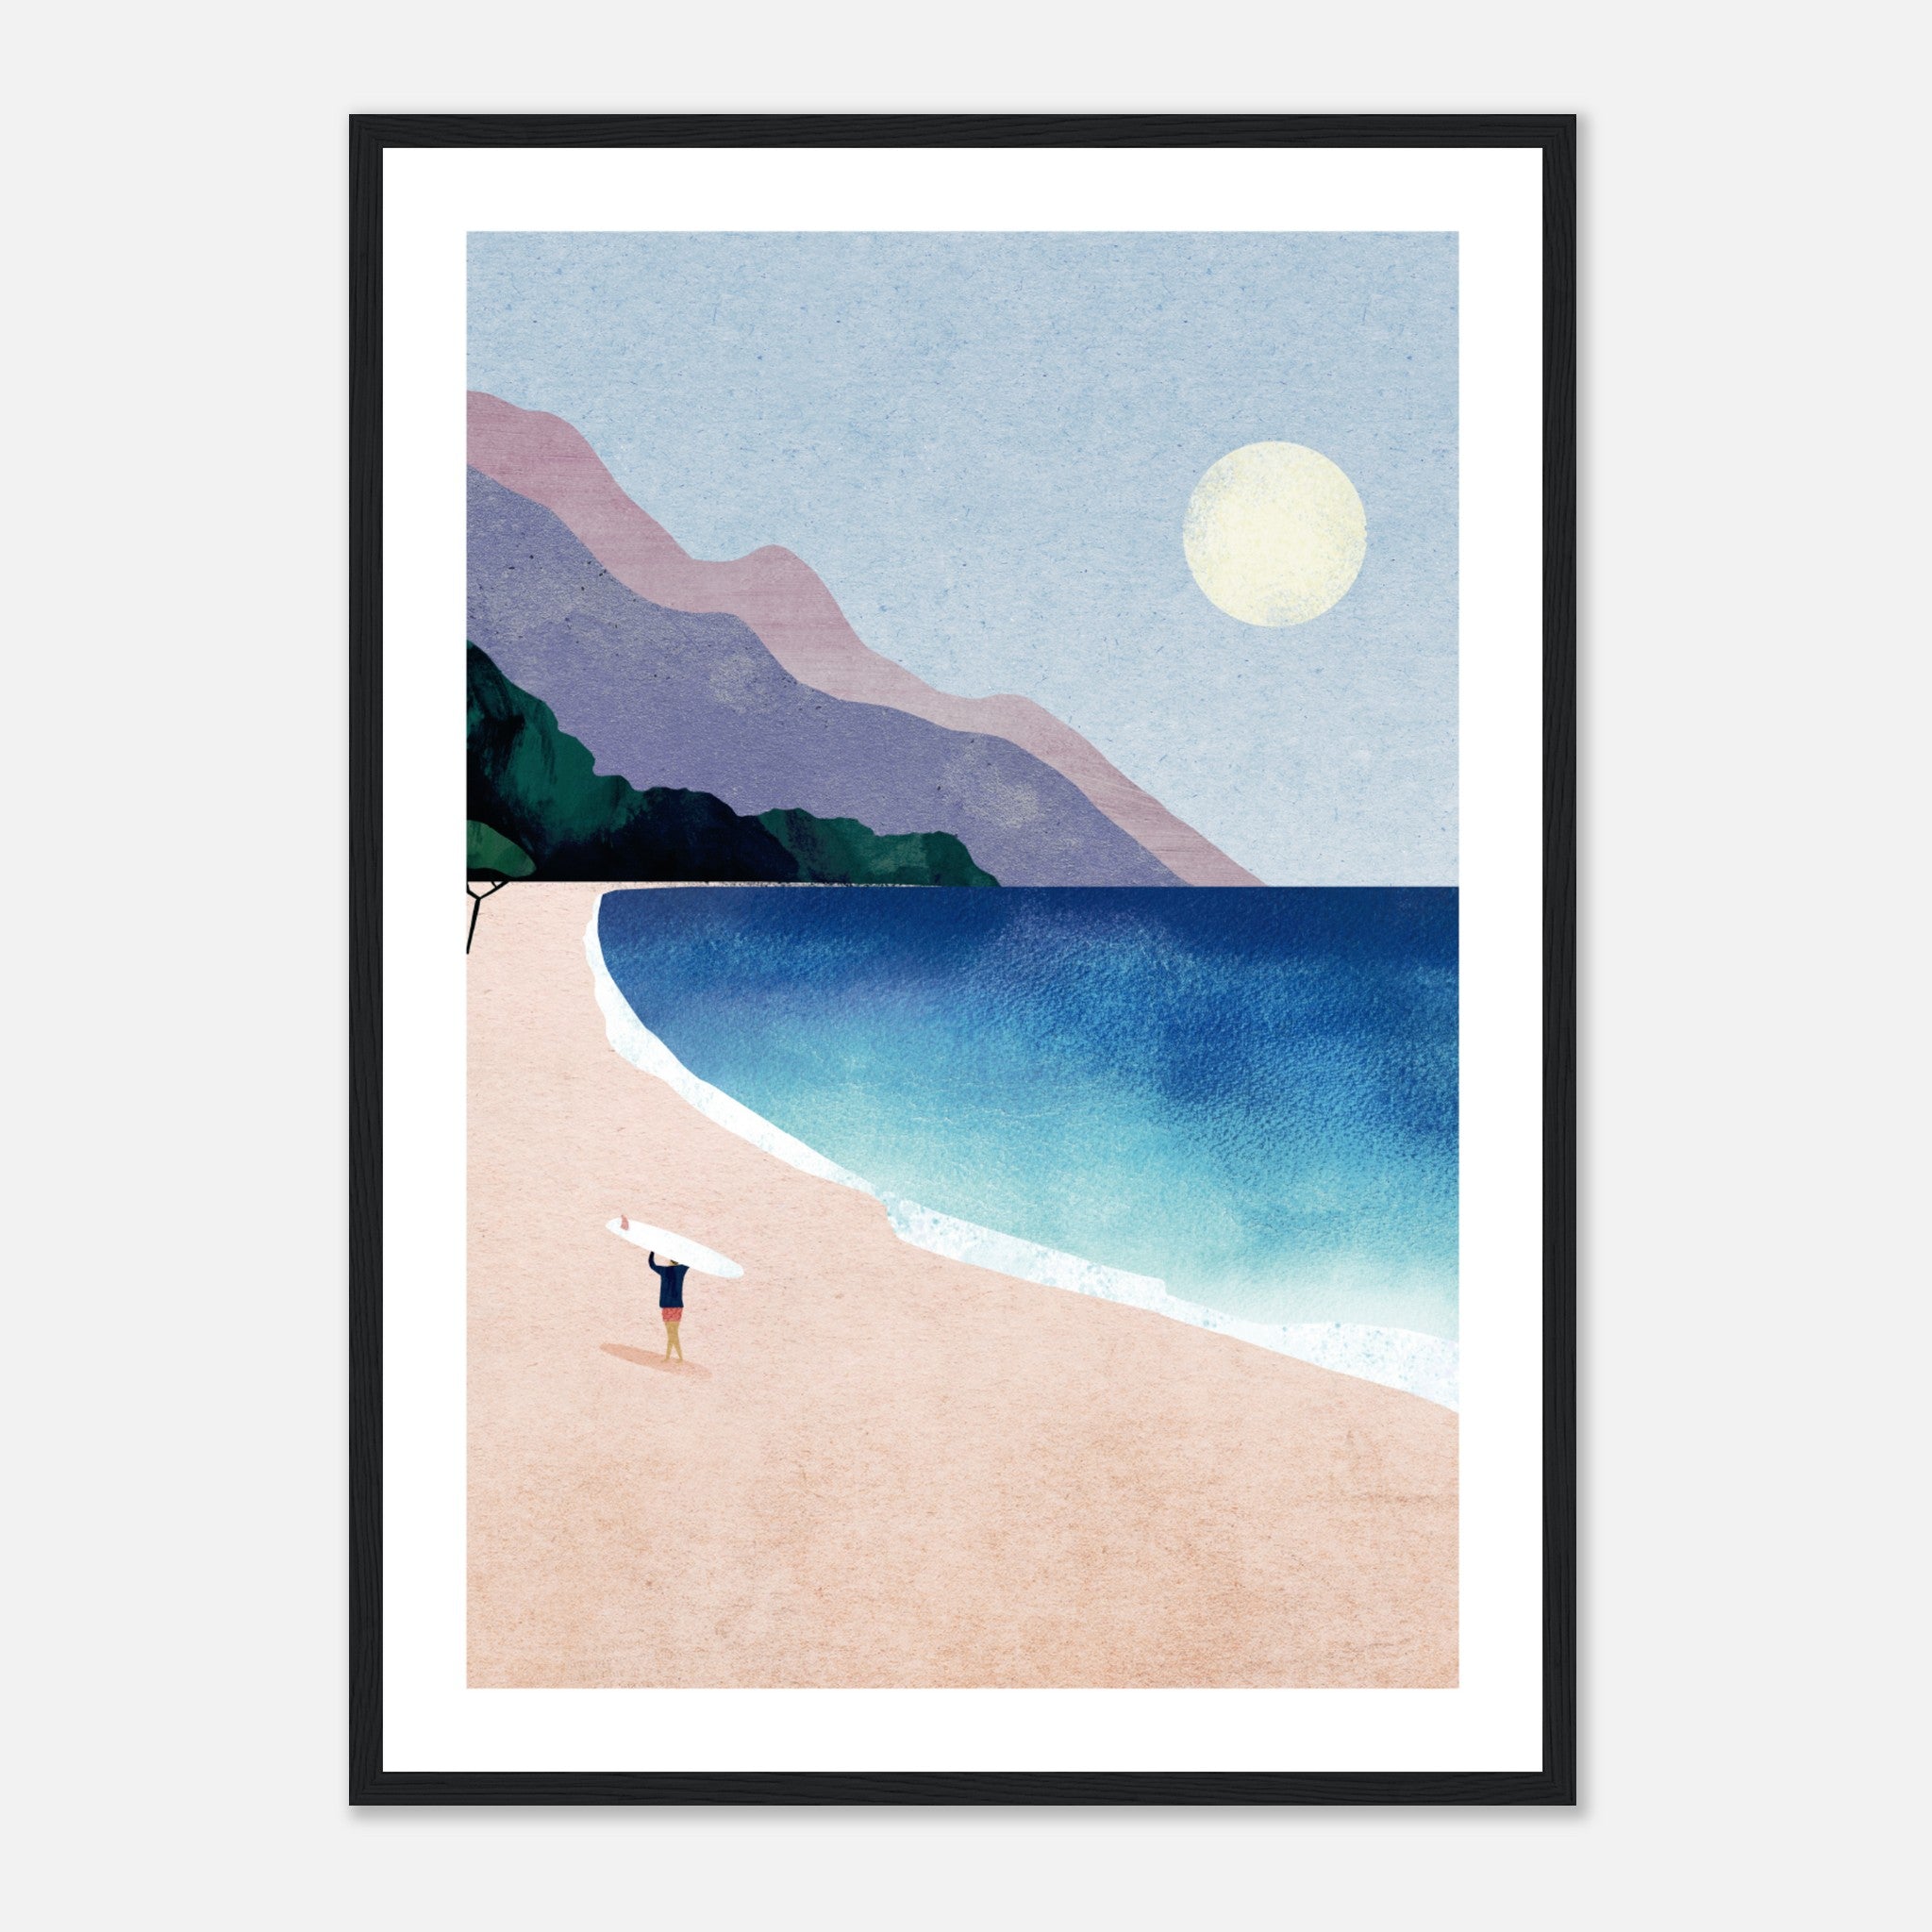 Surf Beach Poster